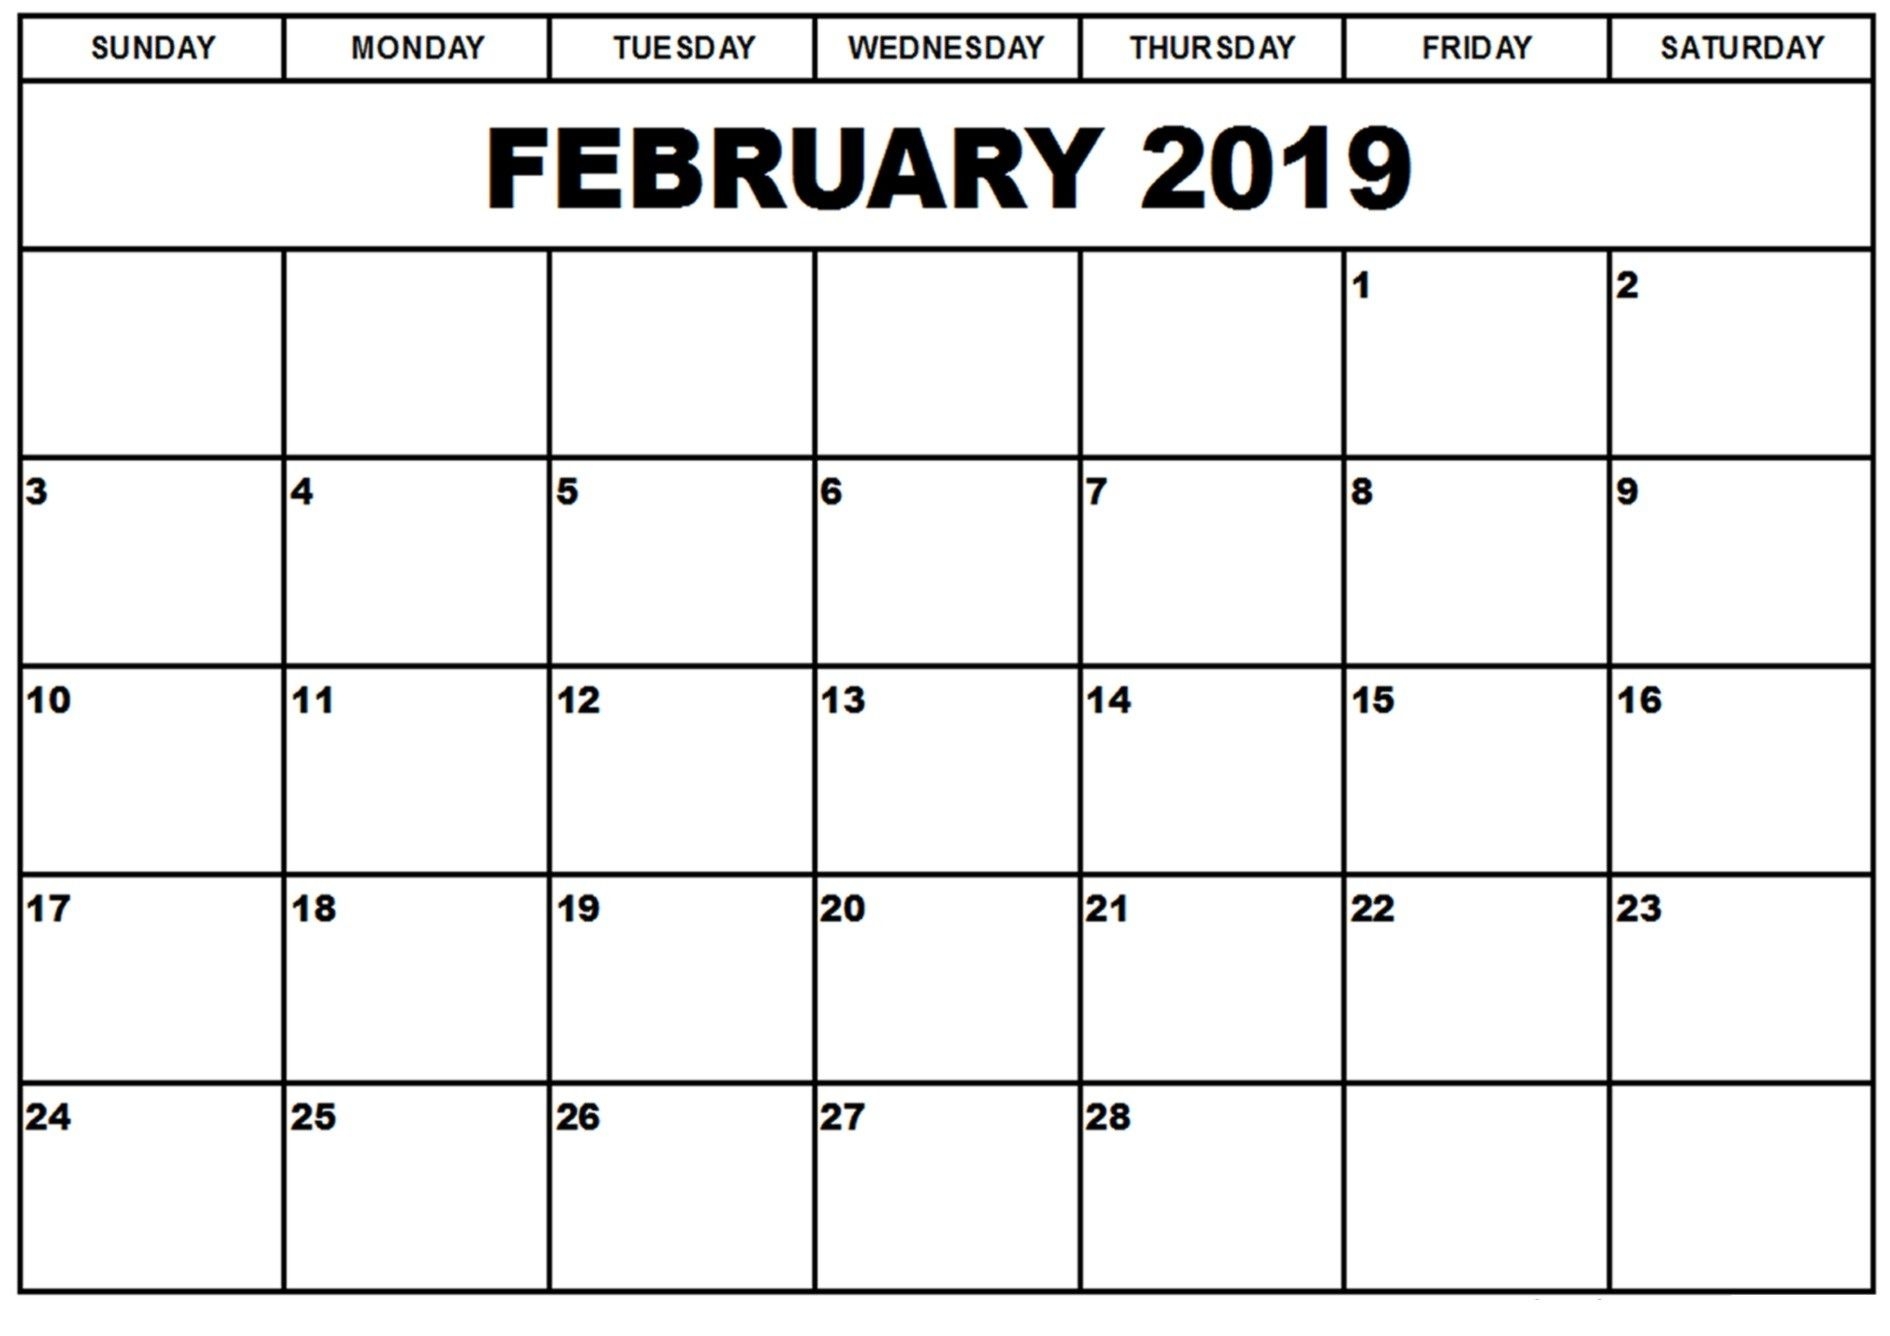 February 2019 Calendar Download February Calendar February 2019